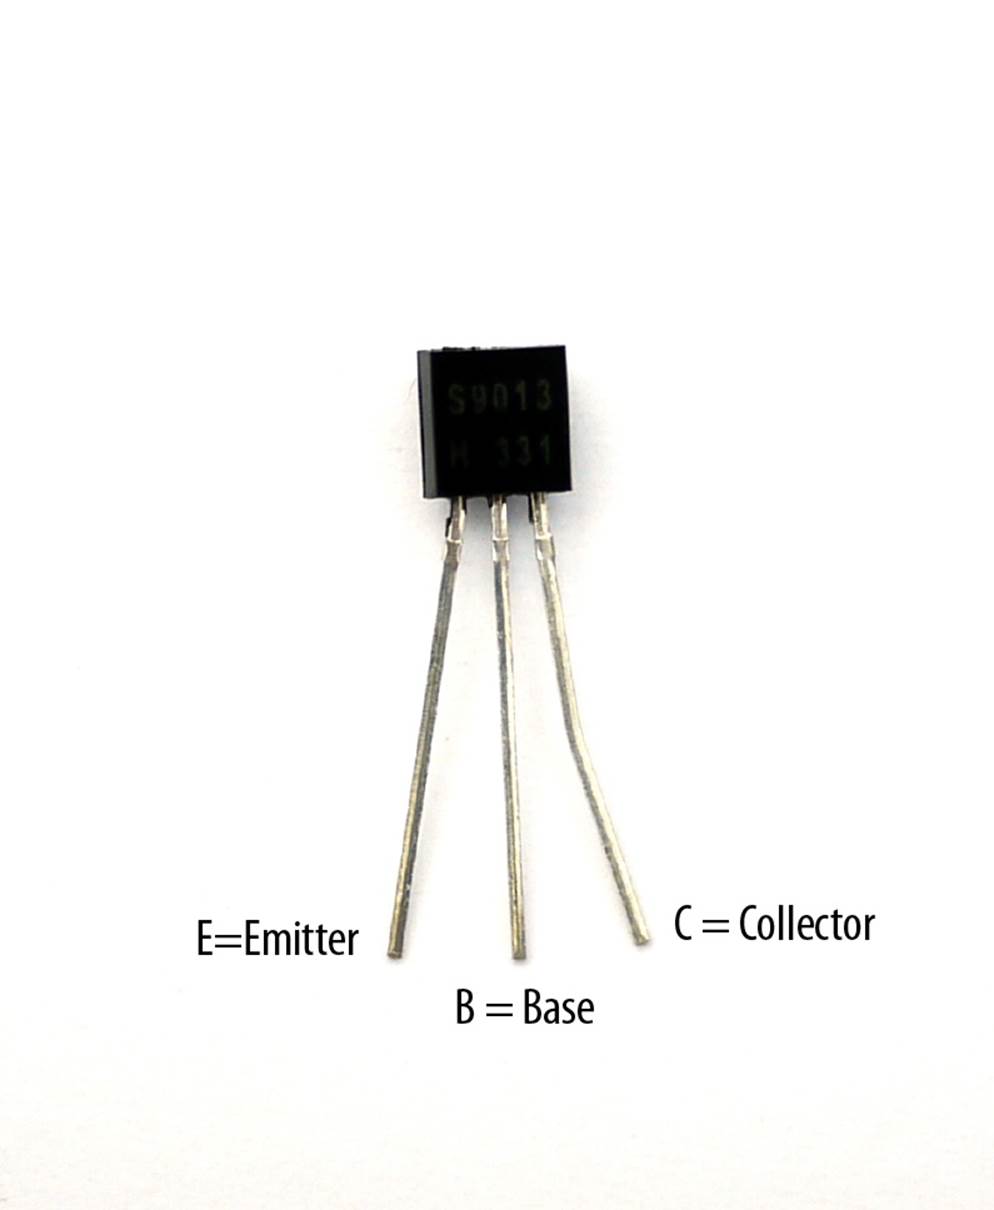 The 2N3904 NPN transistor pinout